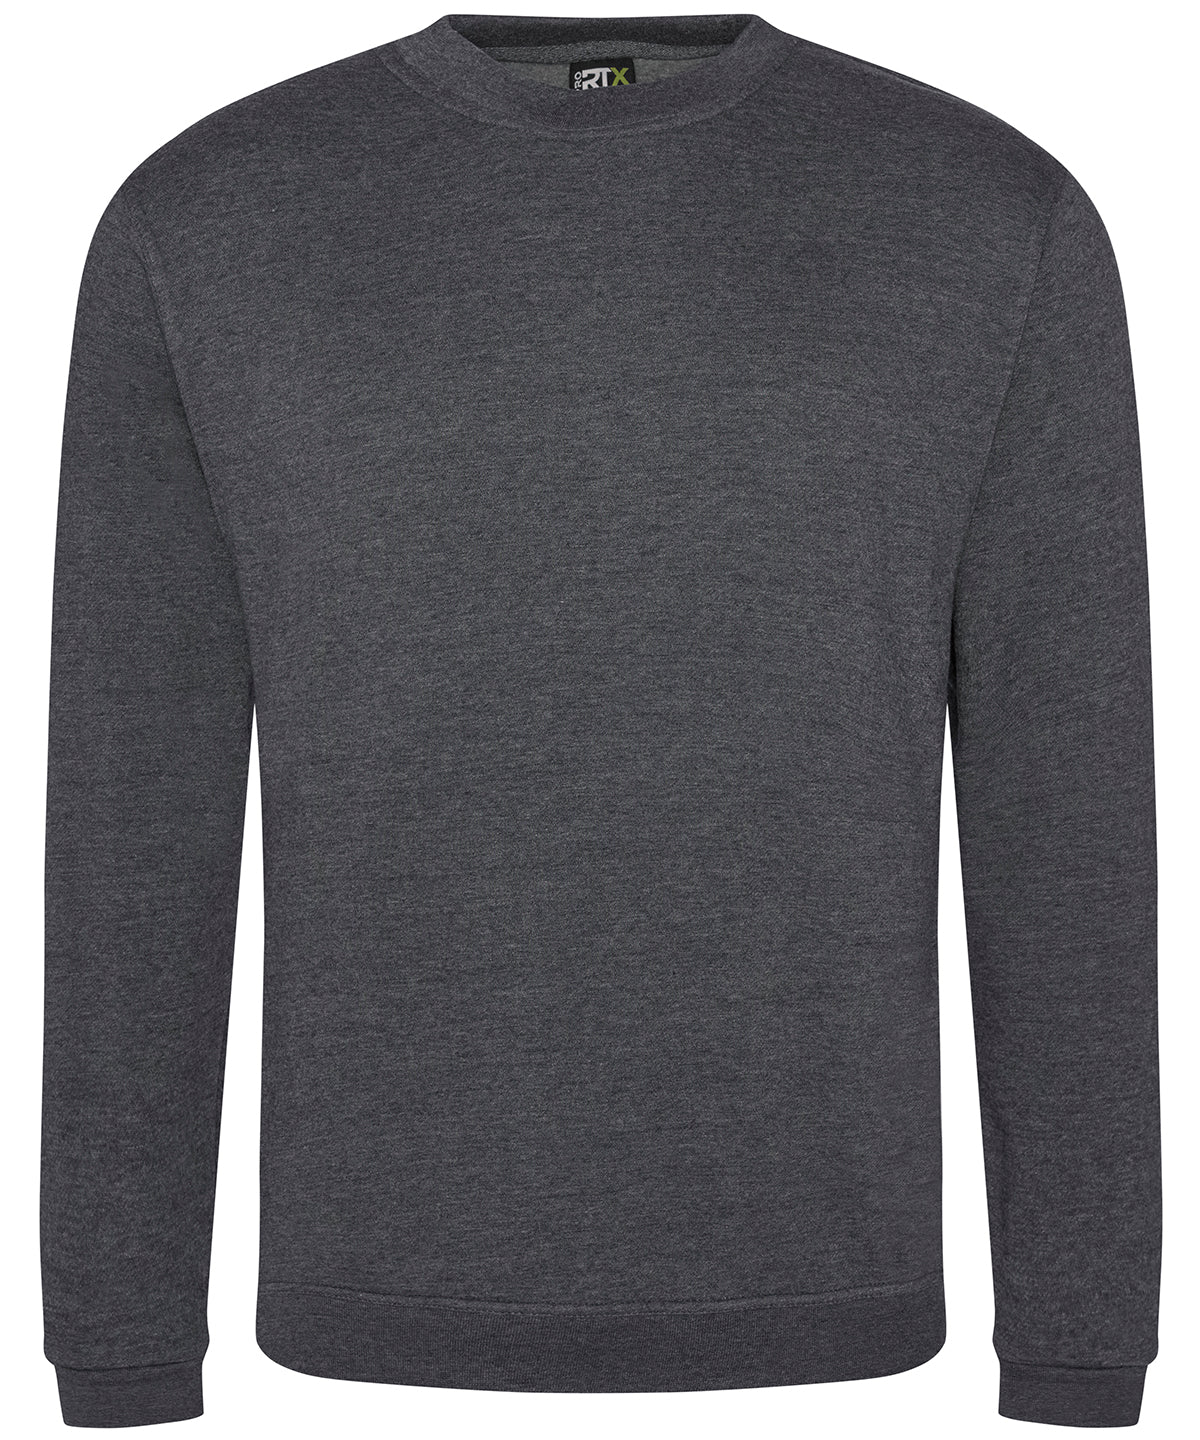 ProRTX Pro sweatshirt Solid Grey